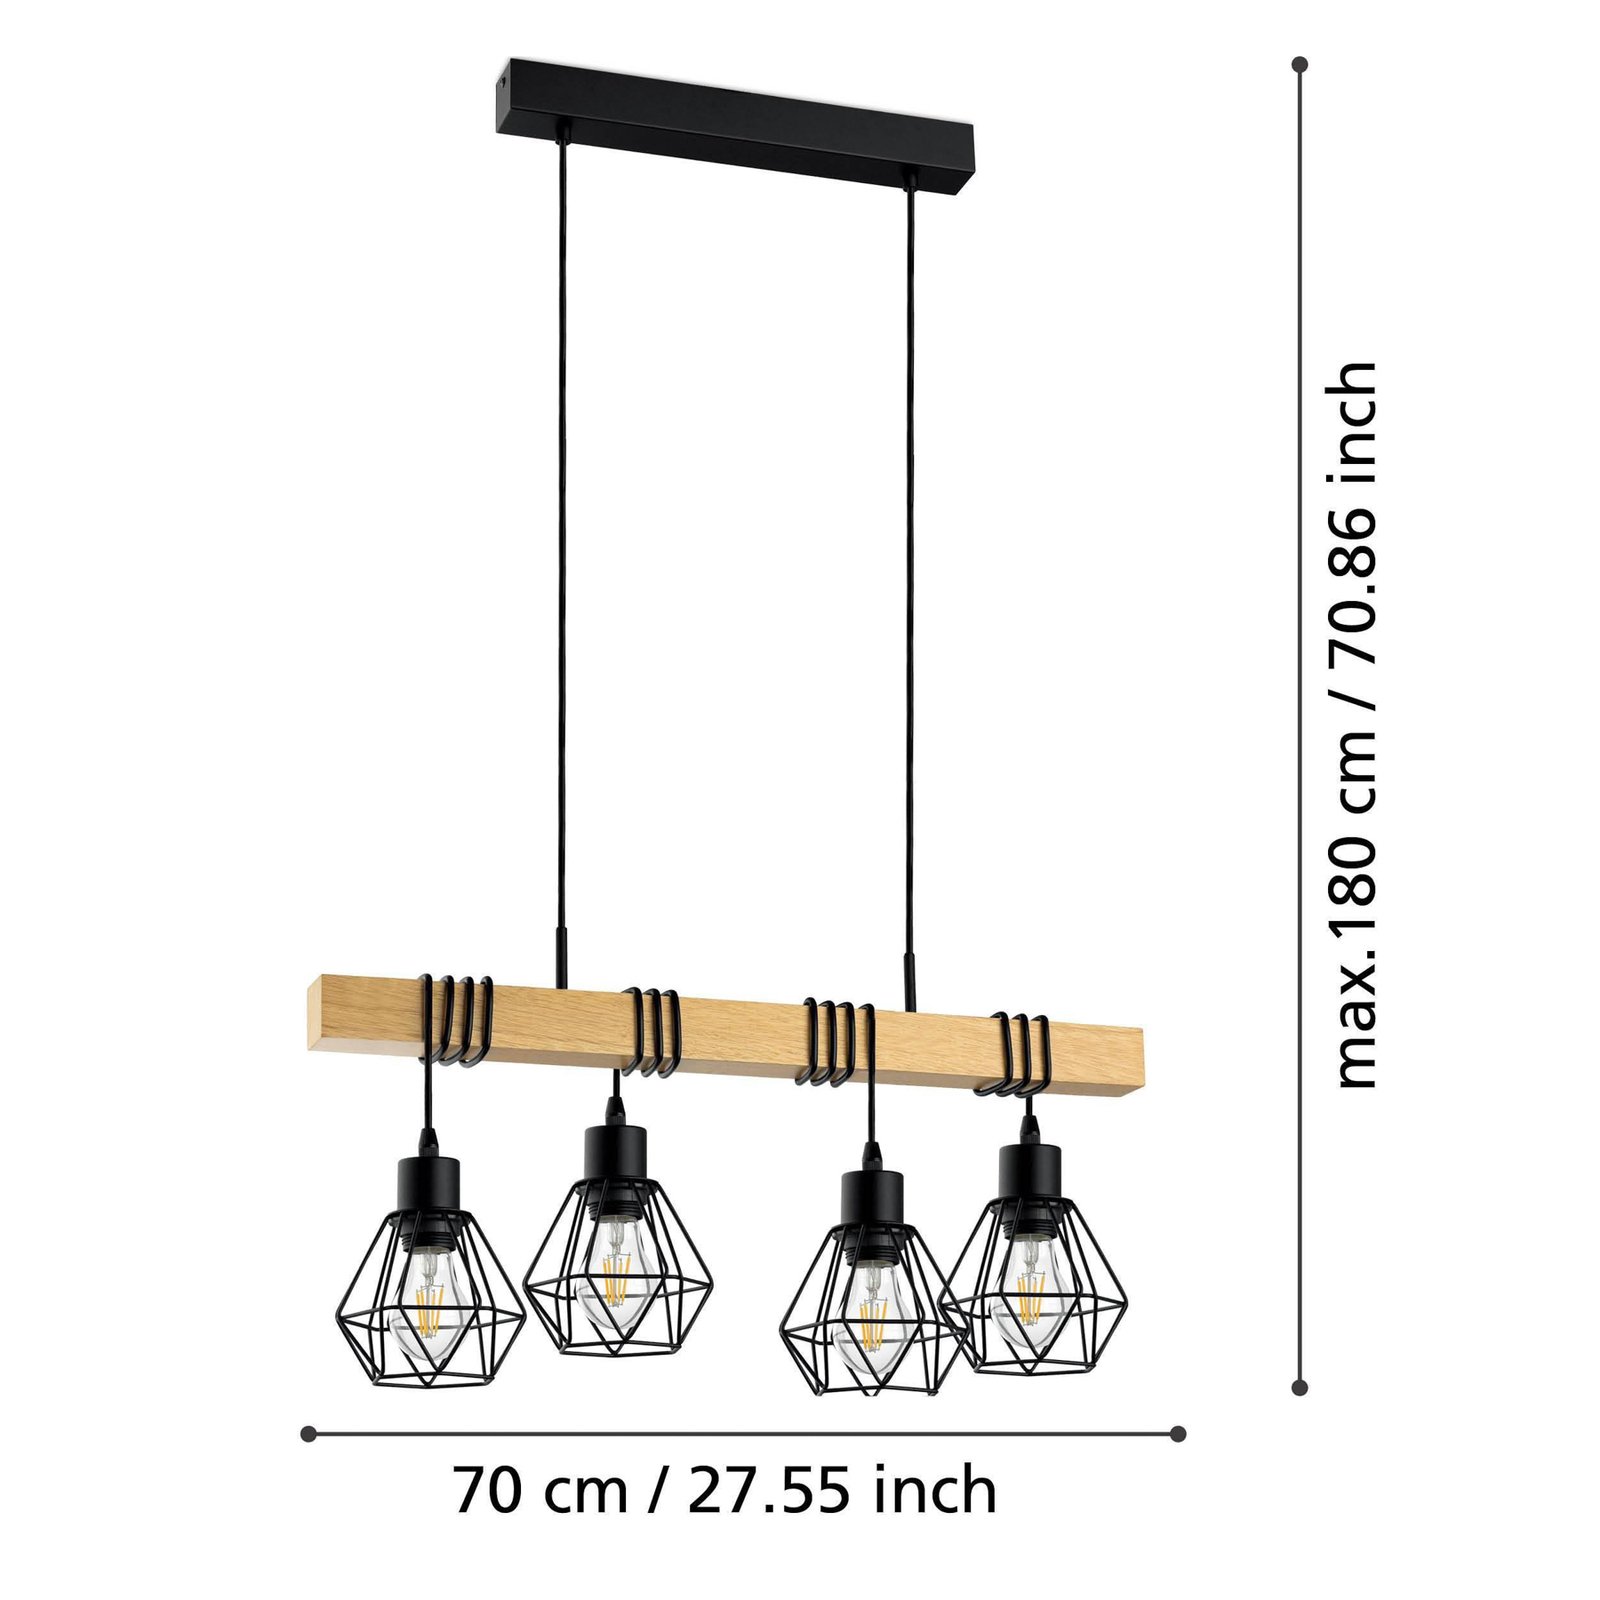 Townshend hänglampa, längd 70 cm, svart/ek, 4 lampor.